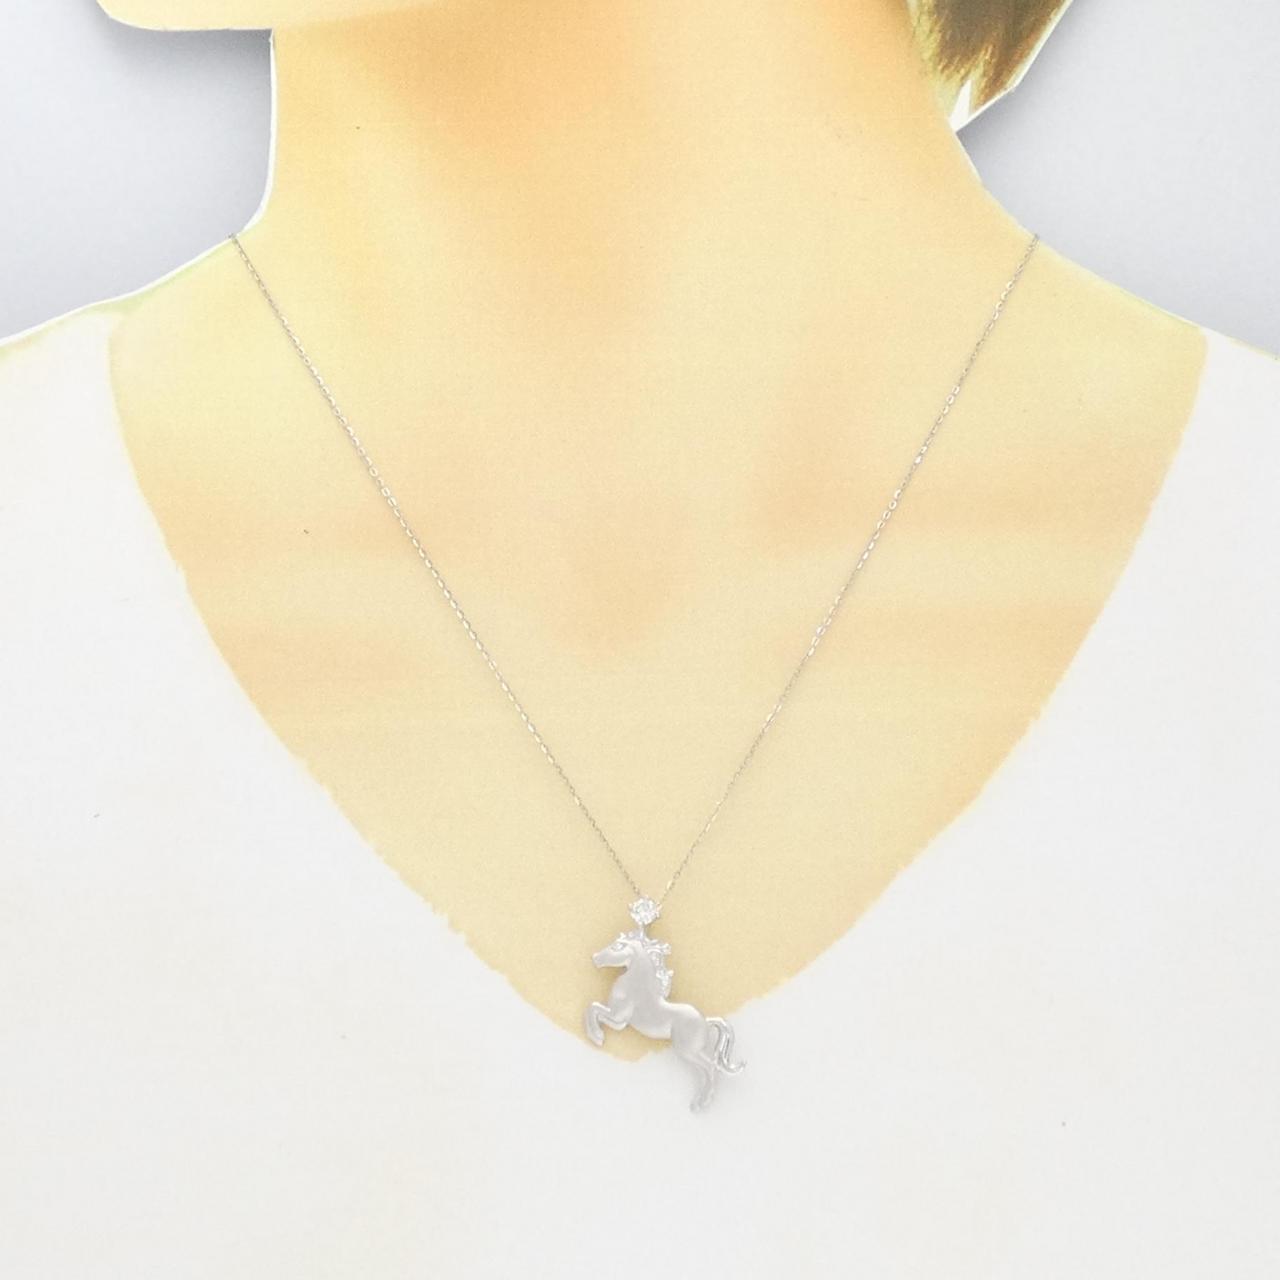 K18WG Horse Diamond Necklace 0.20CT